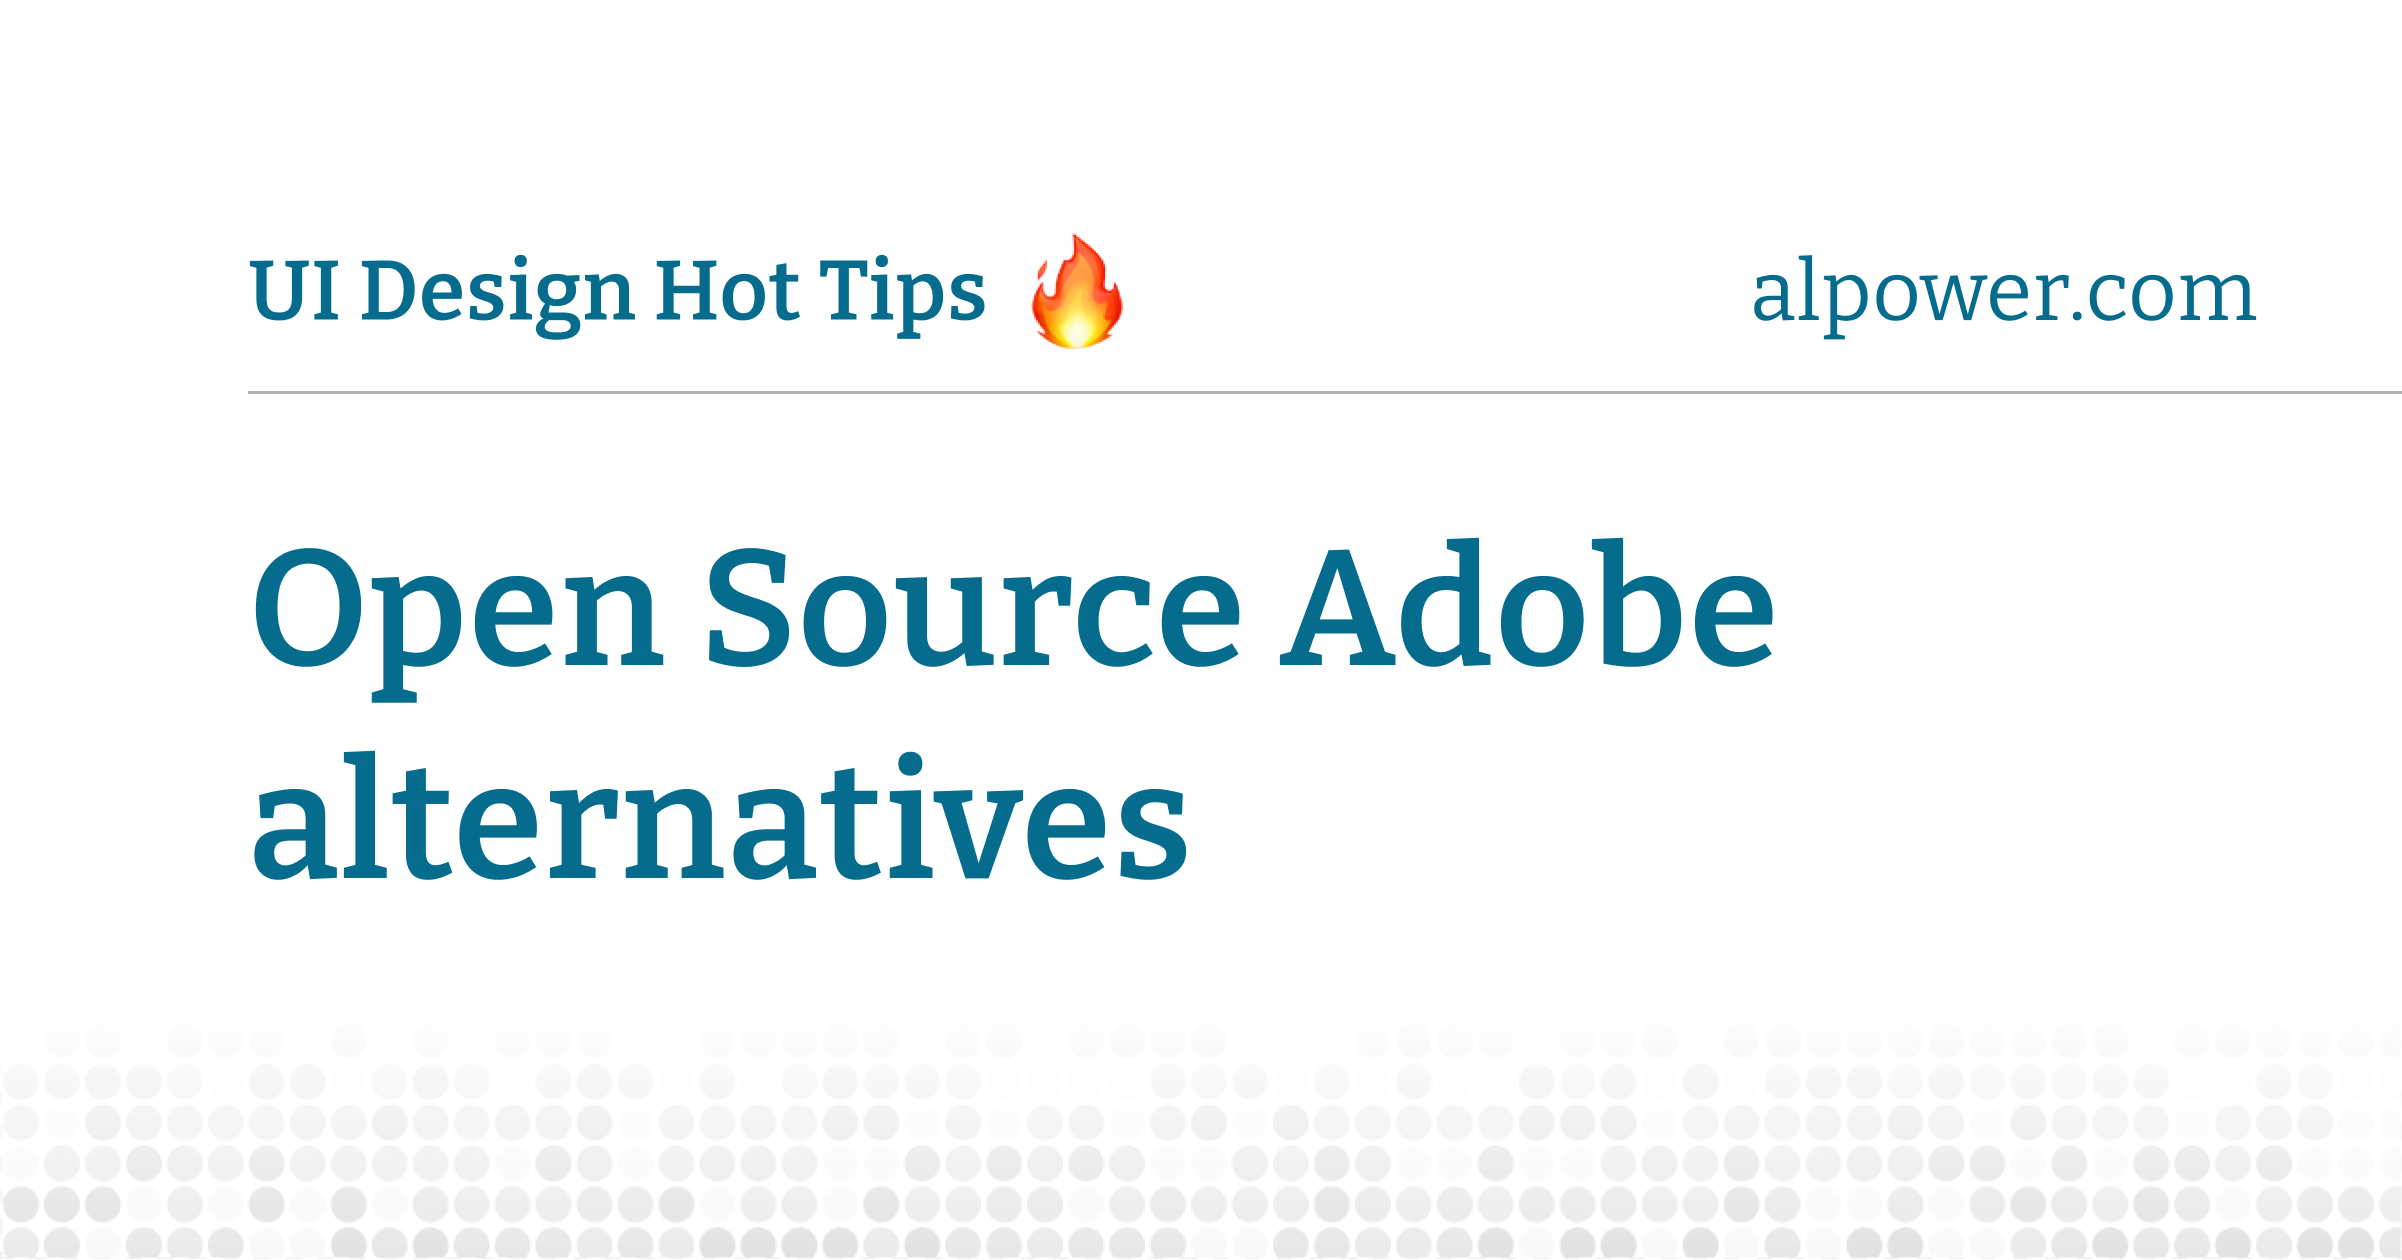 Open source Adobe alternatives